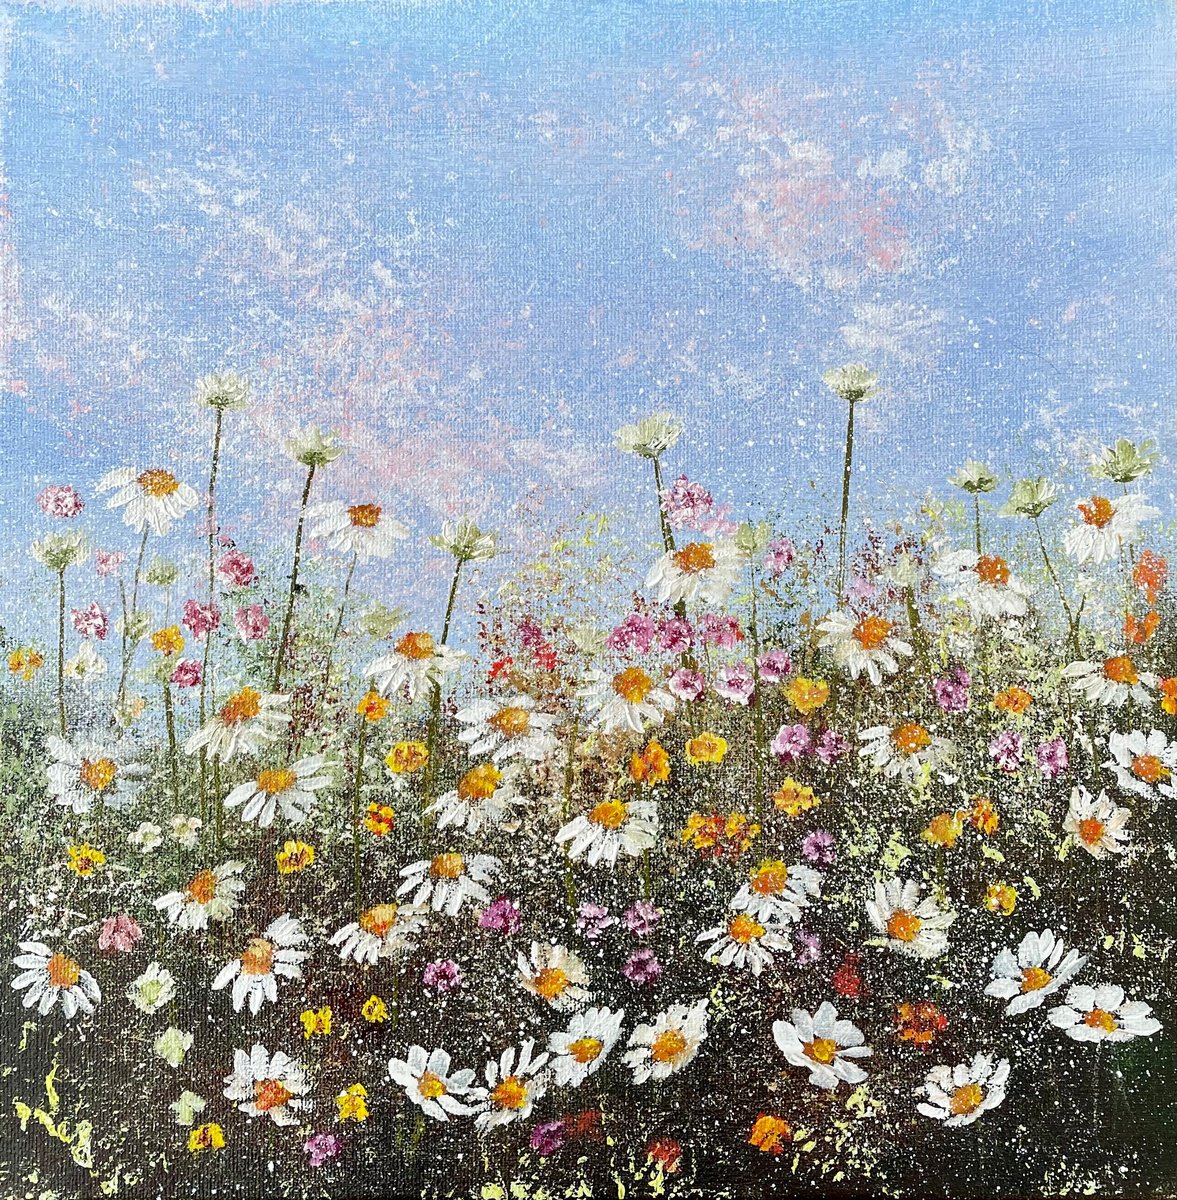 Best meadow flowers - original flowers meadow hot summer gift by Tanja Frost